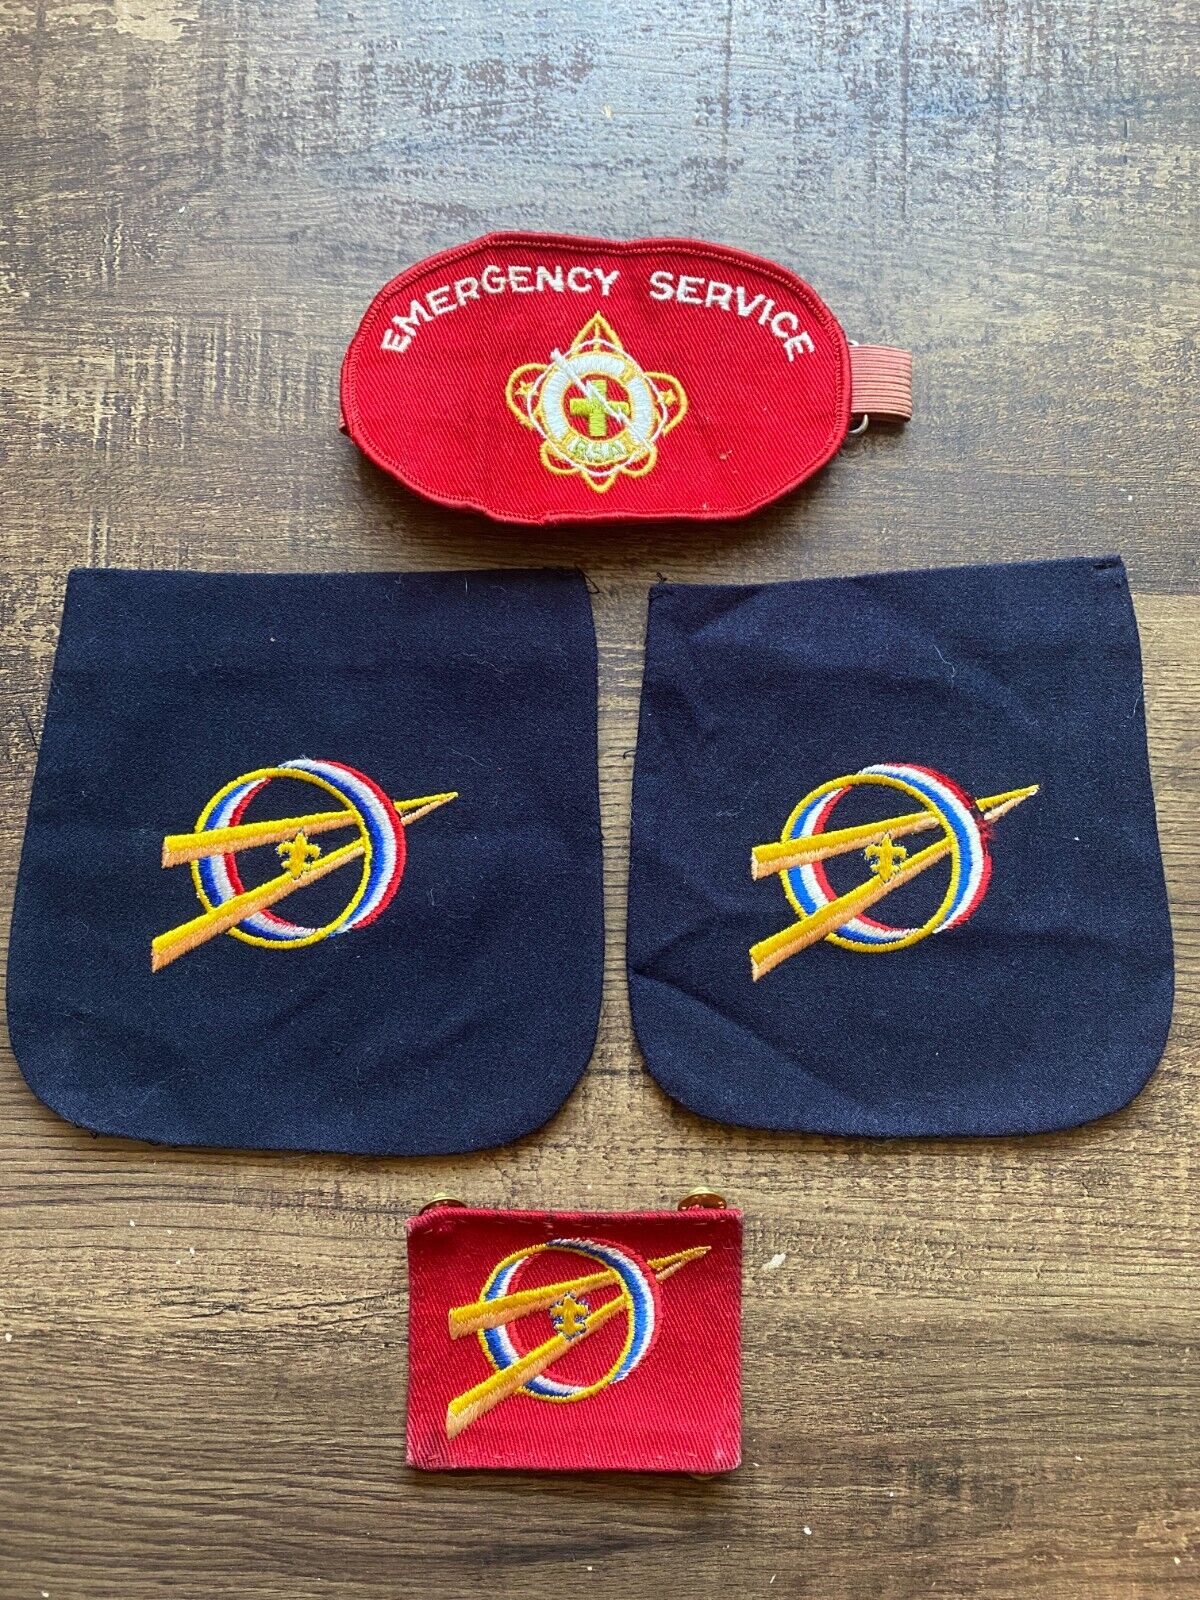 Boy Scouts of America Emergency Service Armband - BSA & Explorer Emblem Patches